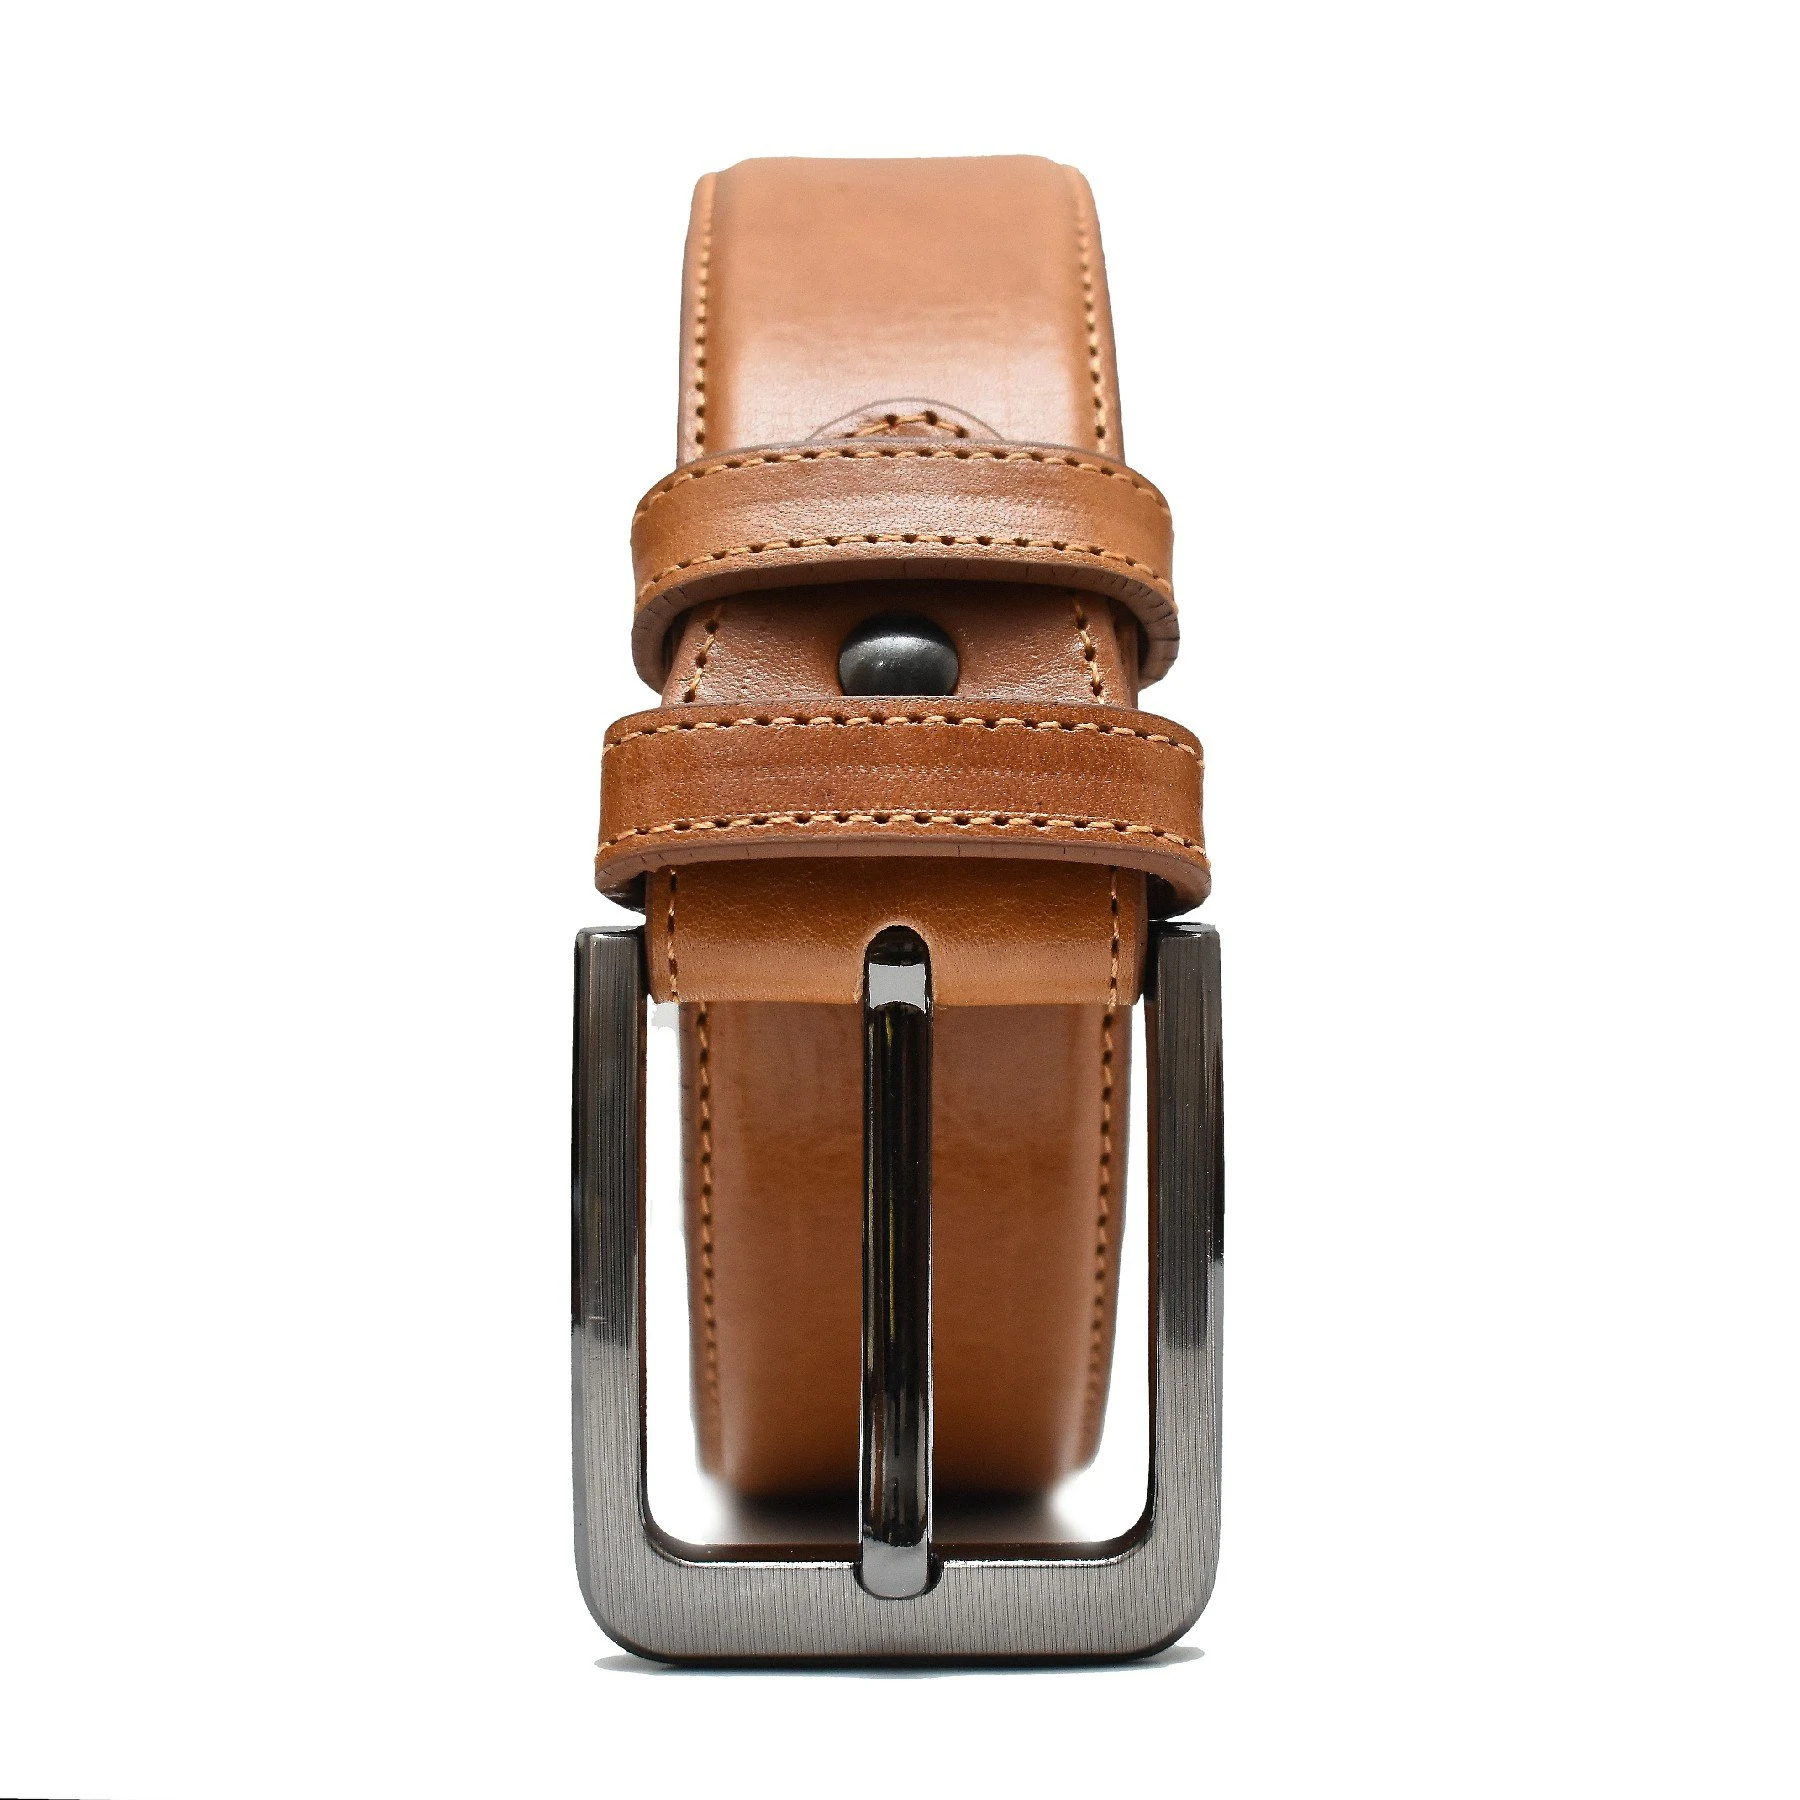 Premium Oil Pull Up Leather Belt For Men (brown)